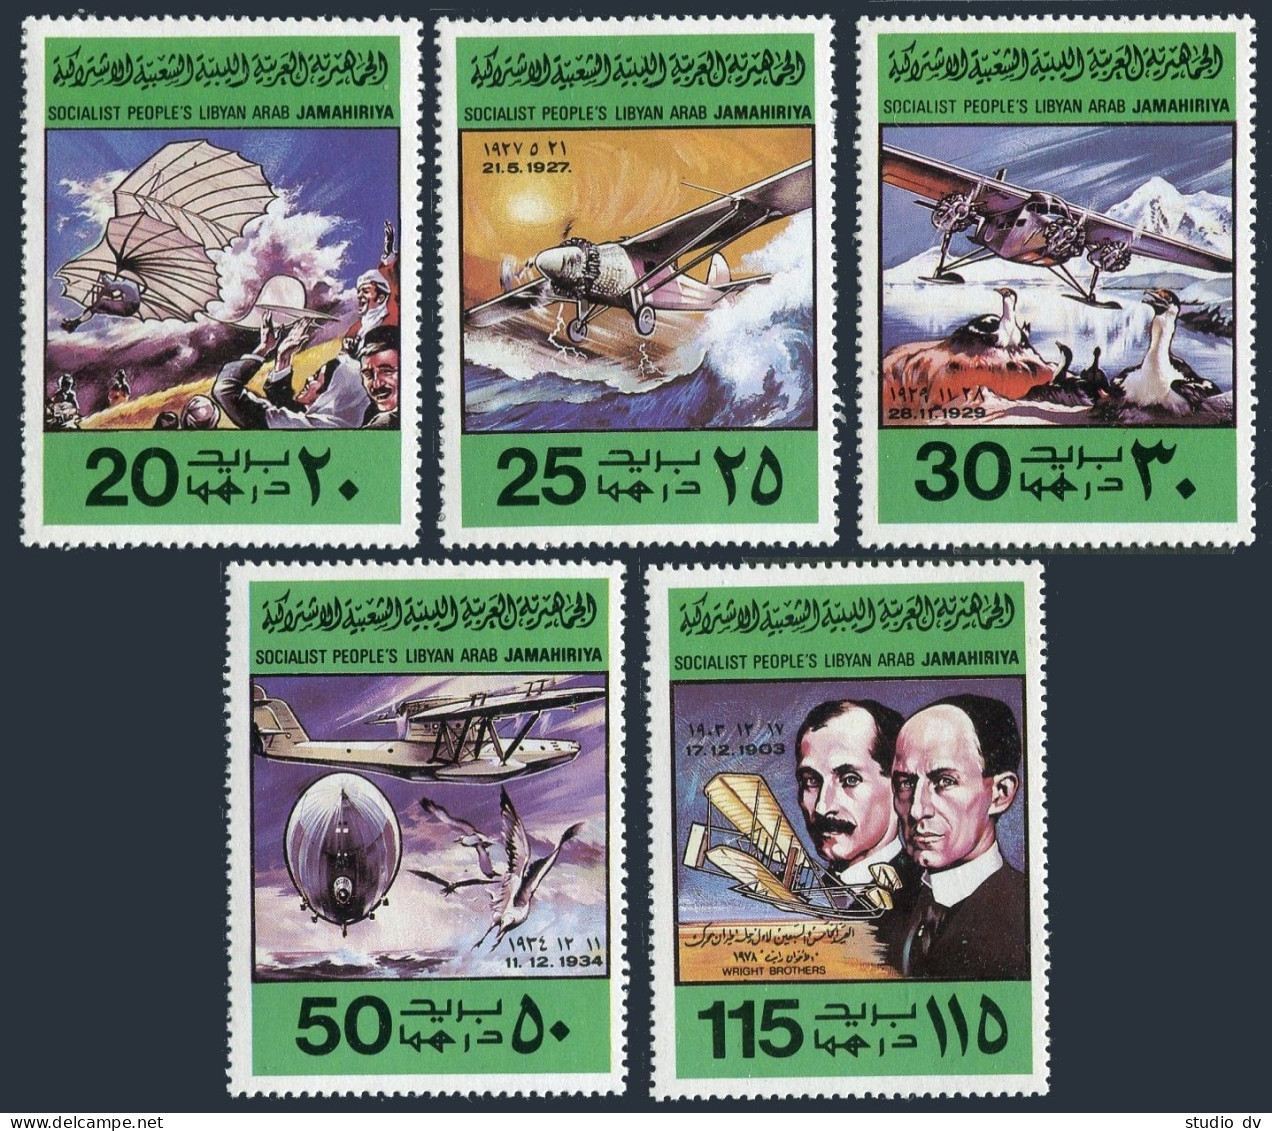 Libya 769-773, MNH. Michel 682-686. 1978. Gilder, Plane, Zeppelin, Icarus. Birds - Libia